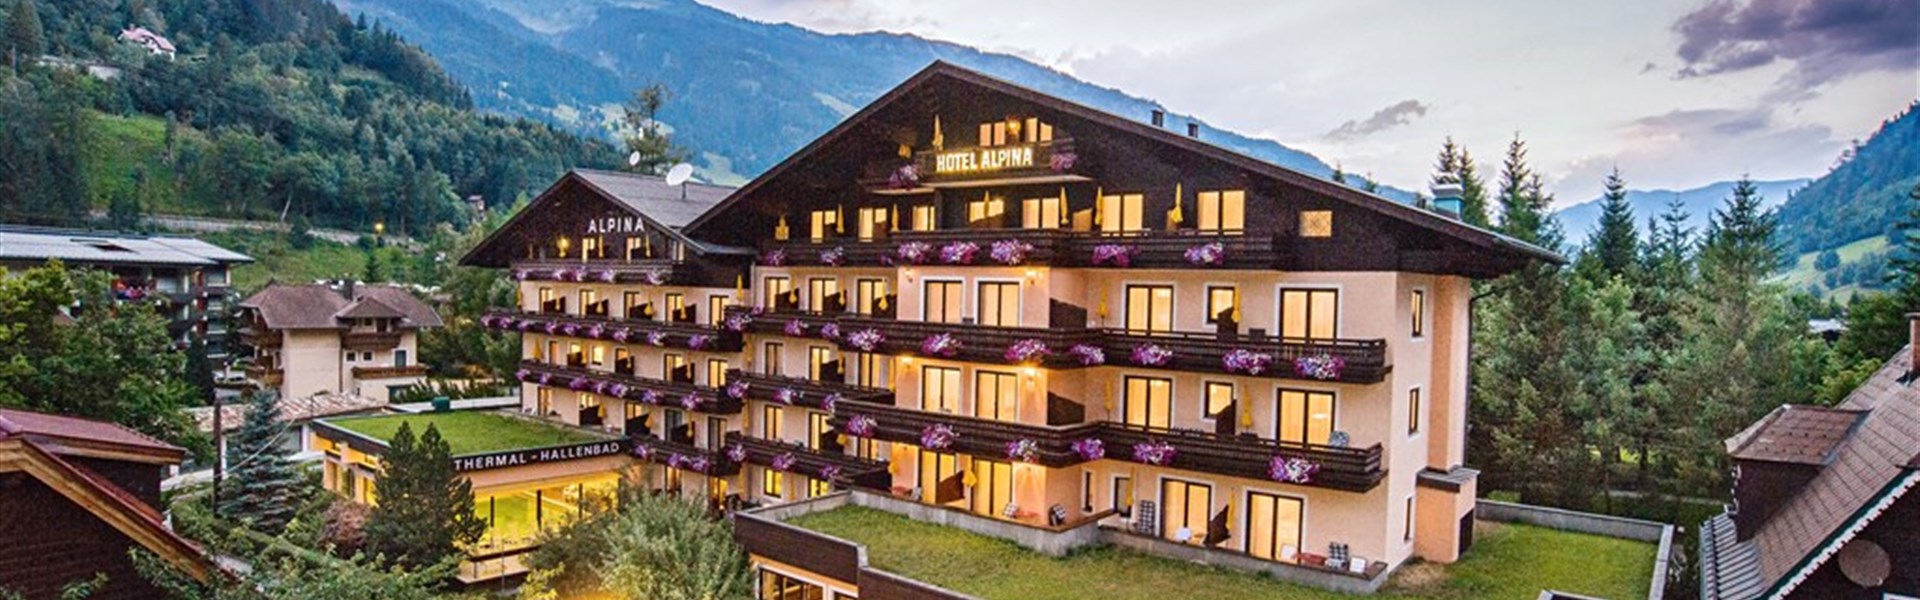 Hotel Alpina (S) - 